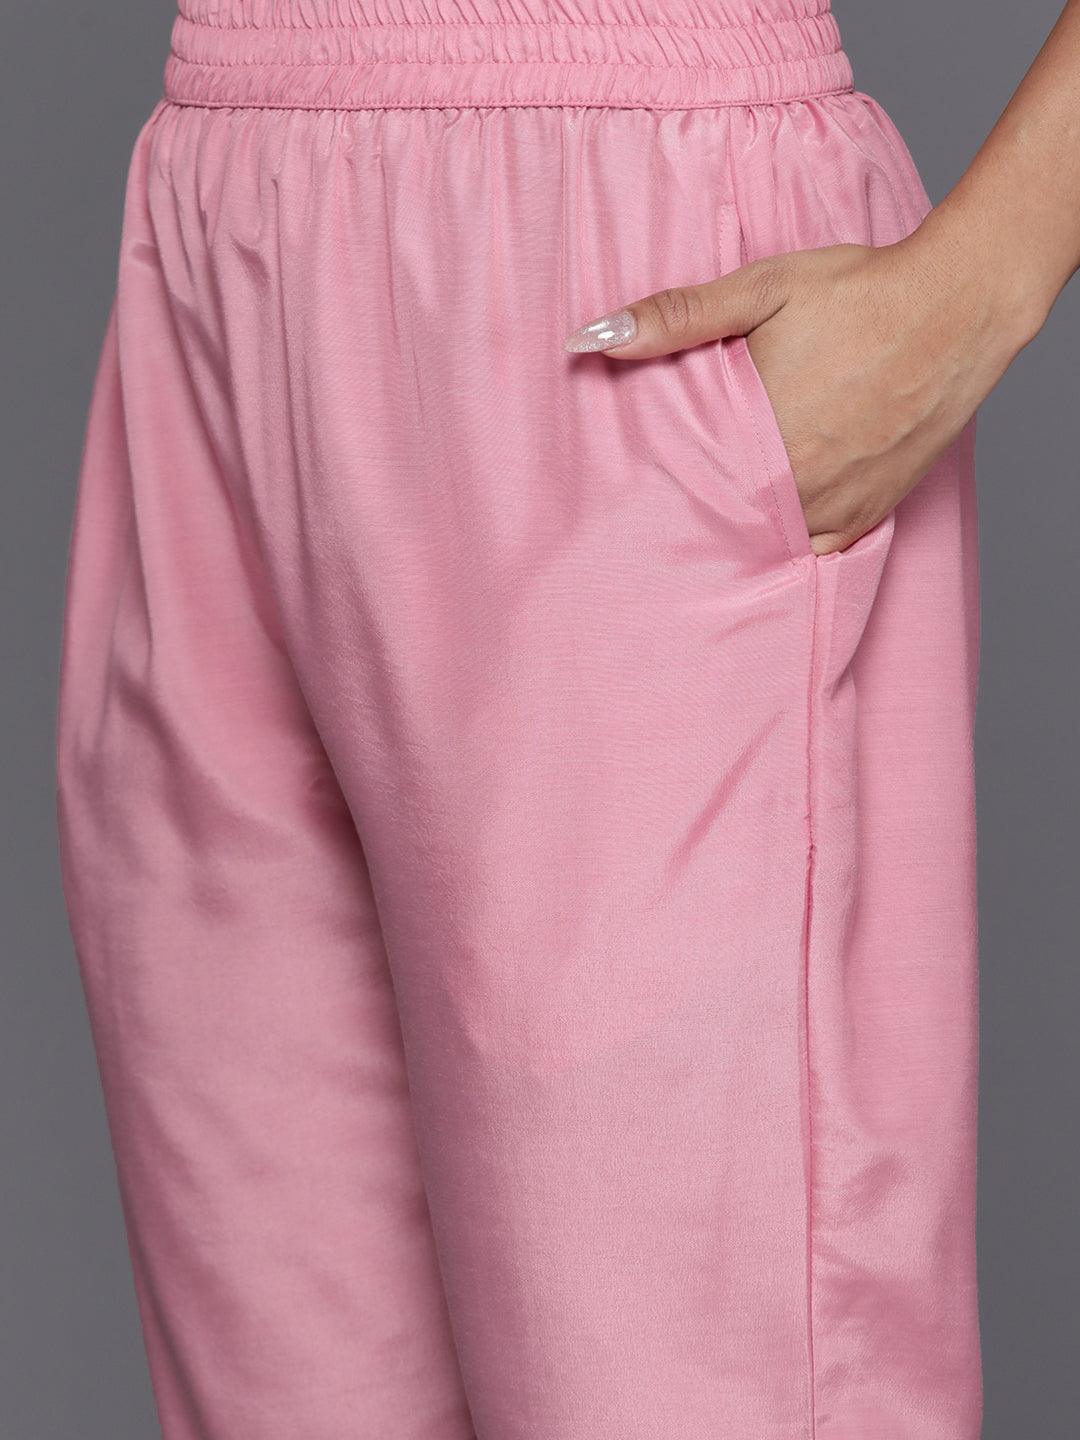 Libas Art Pink Yoke Design Silk Anarkali Suit With Dupatta